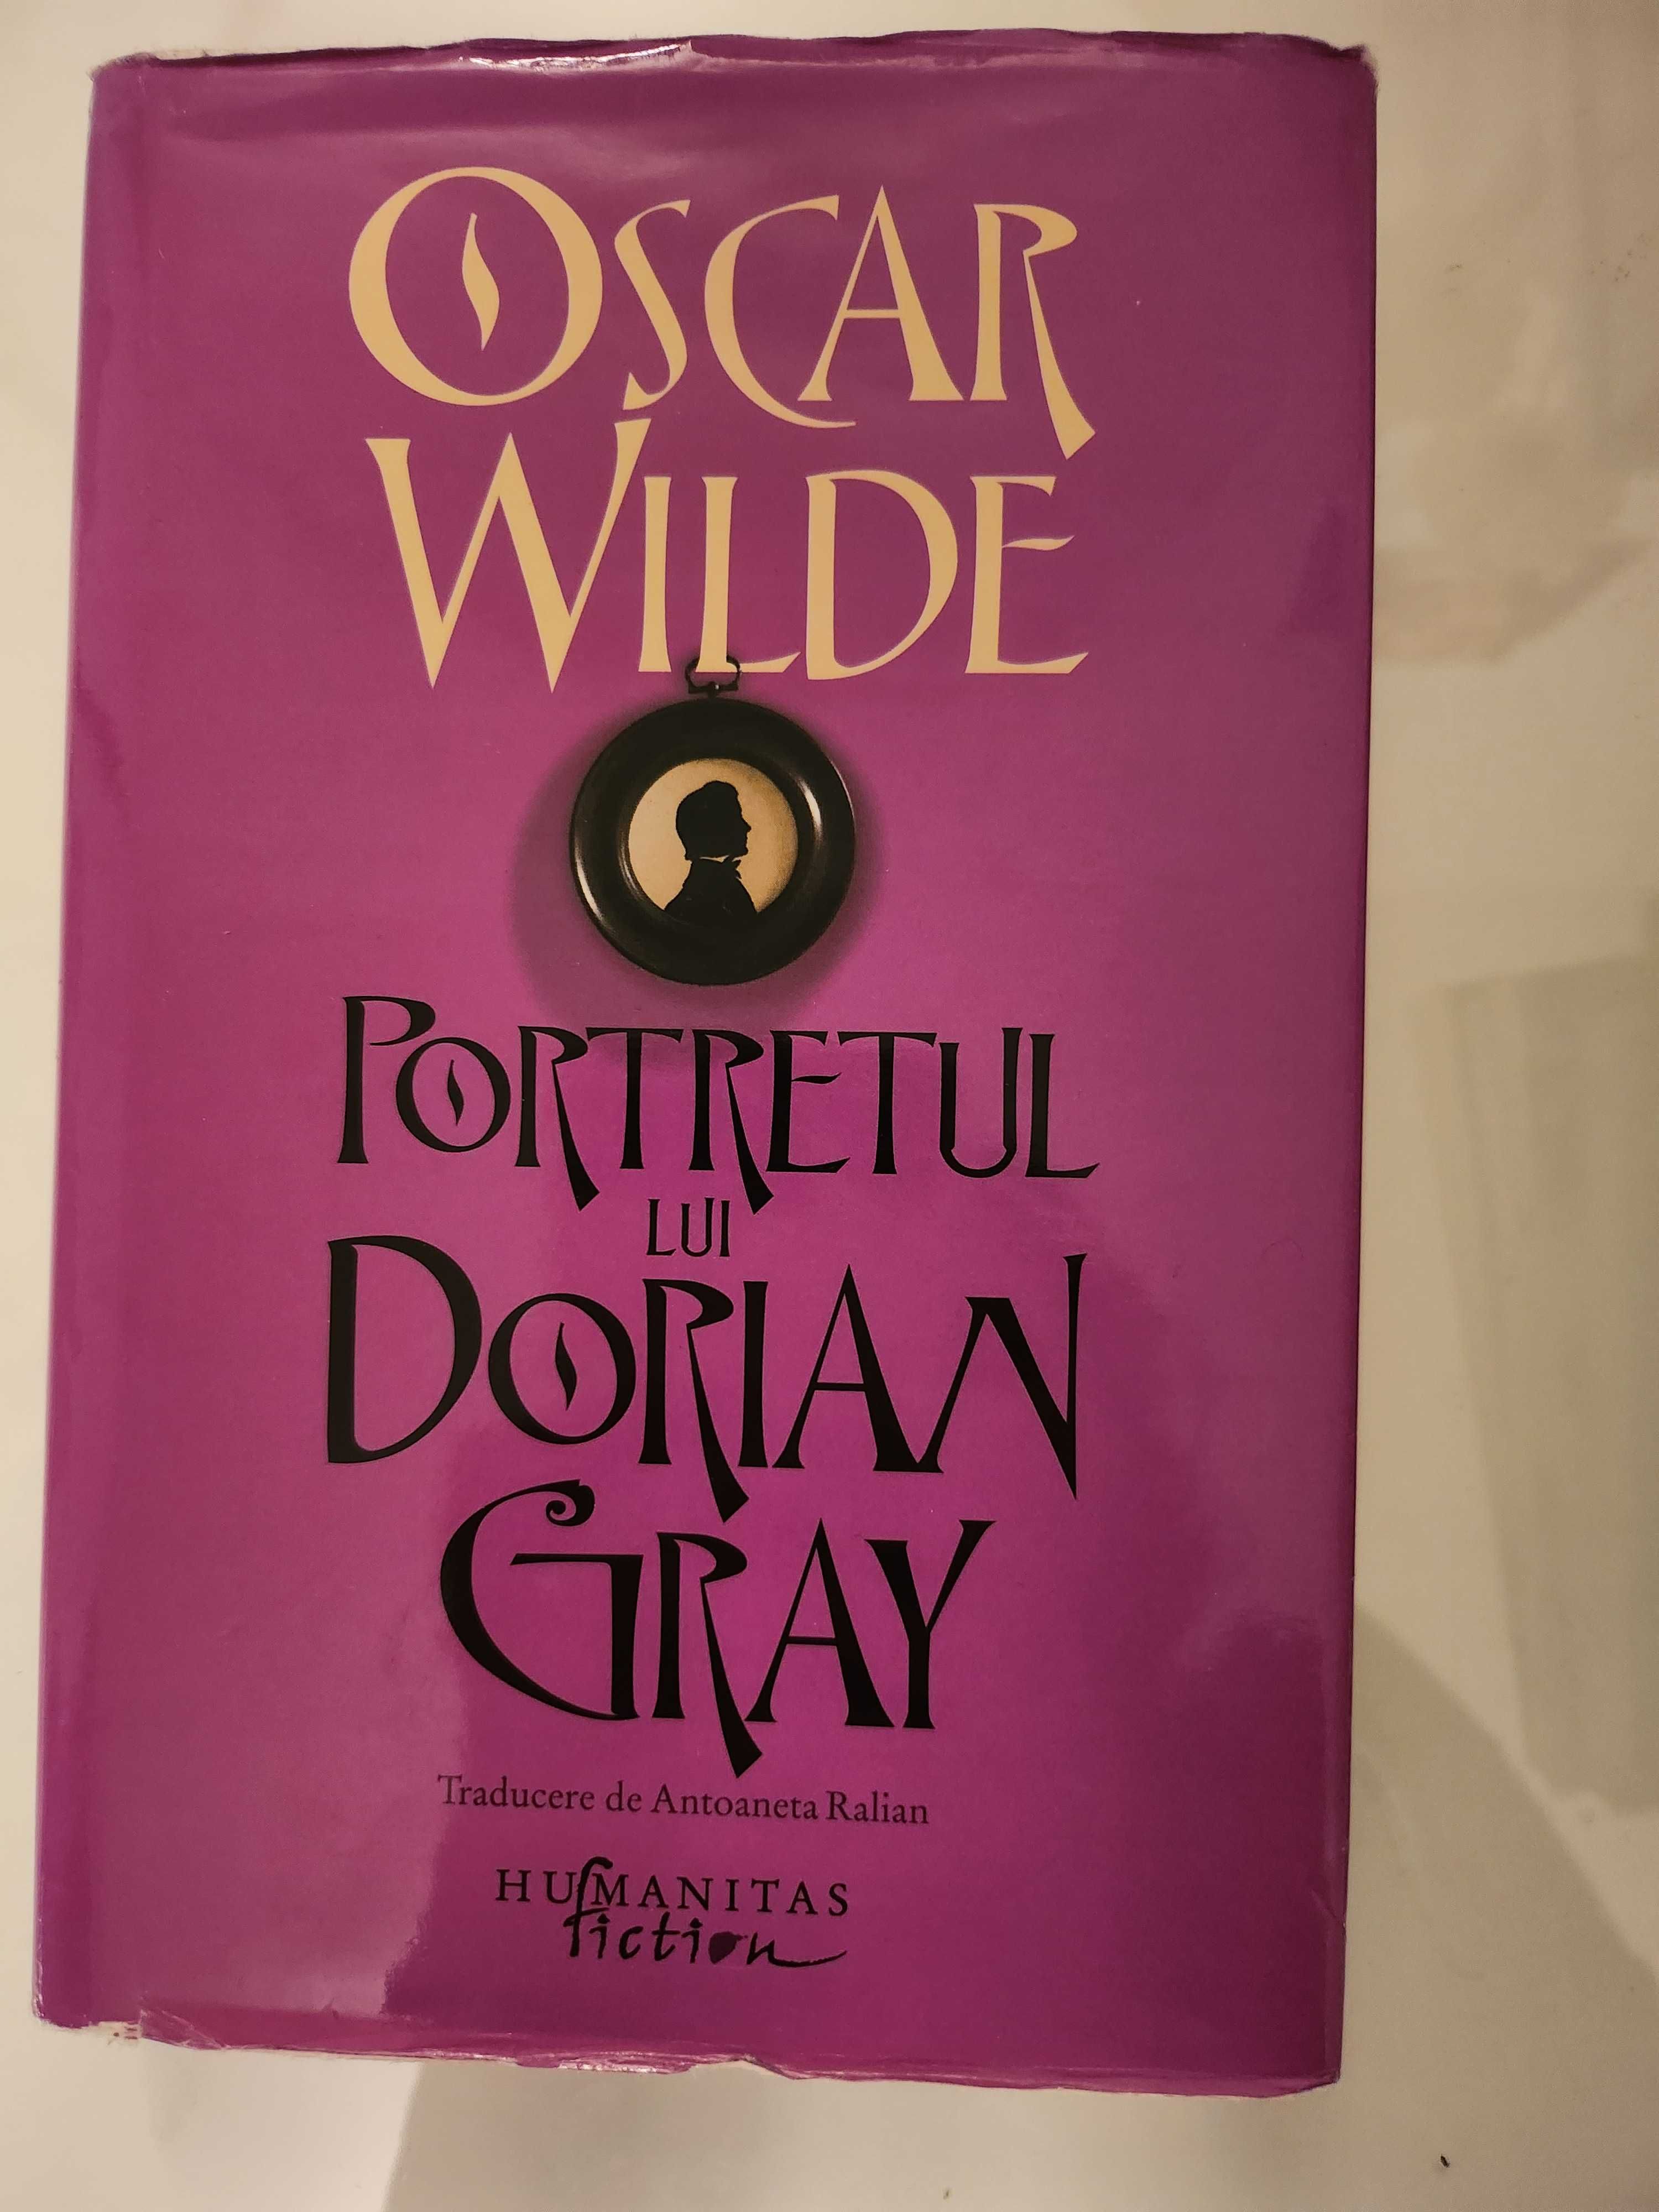 Portretul lui Dorian Gray, Oscar Wilde, cartonata